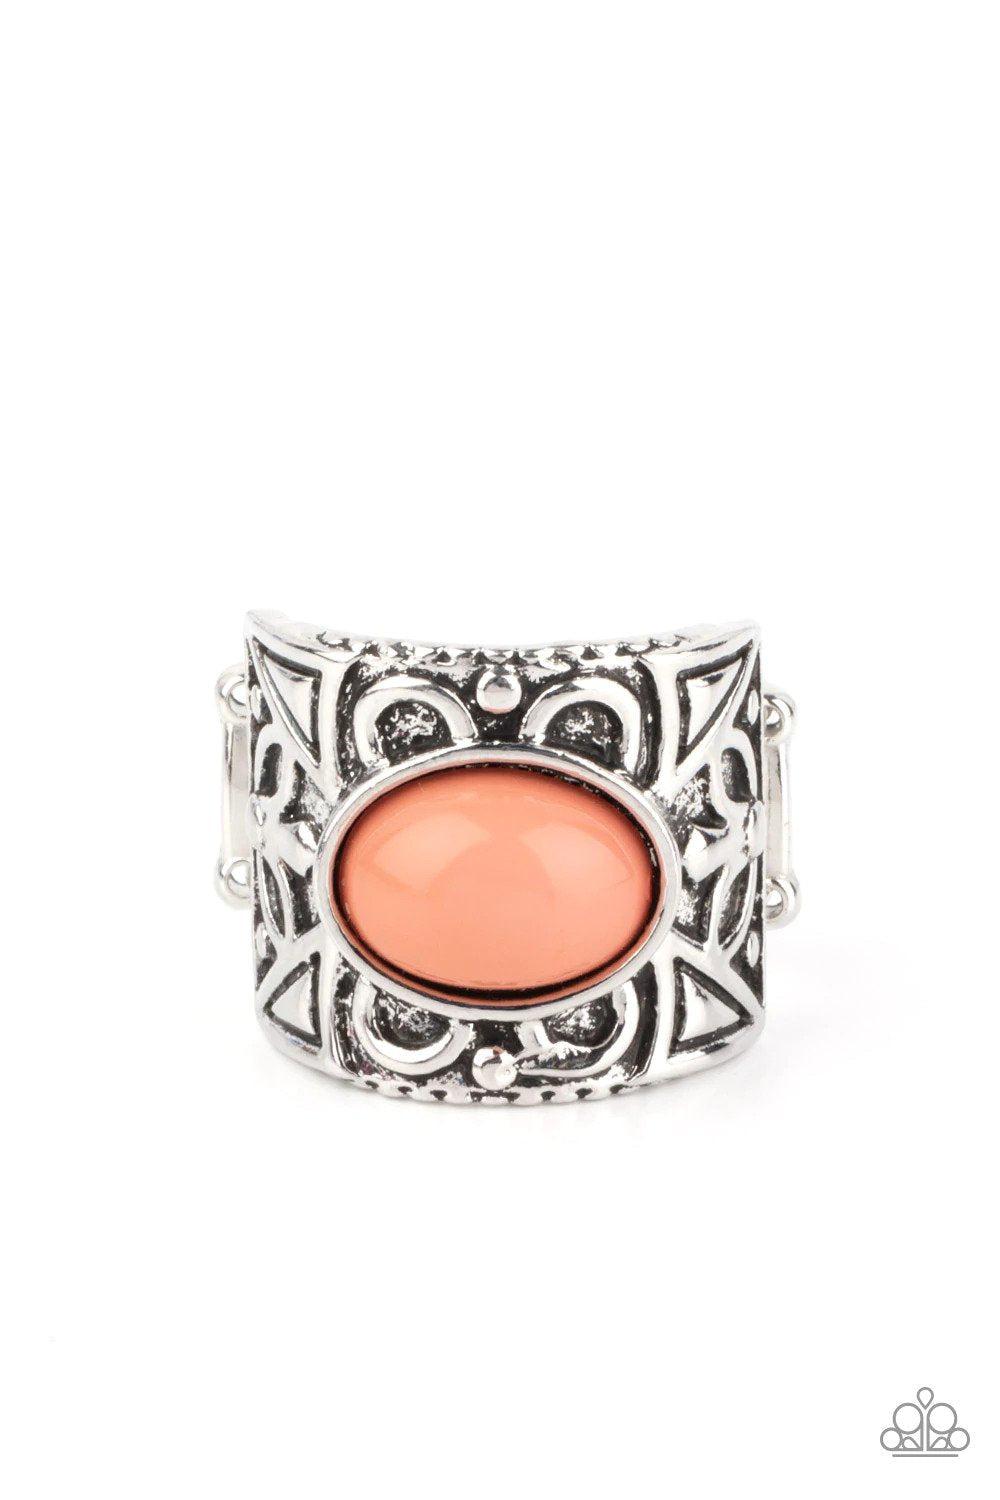 Bubbly Bonanza Orange Ring - Paparazzi Accessories- lightbox - CarasShop.com - $5 Jewelry by Cara Jewels